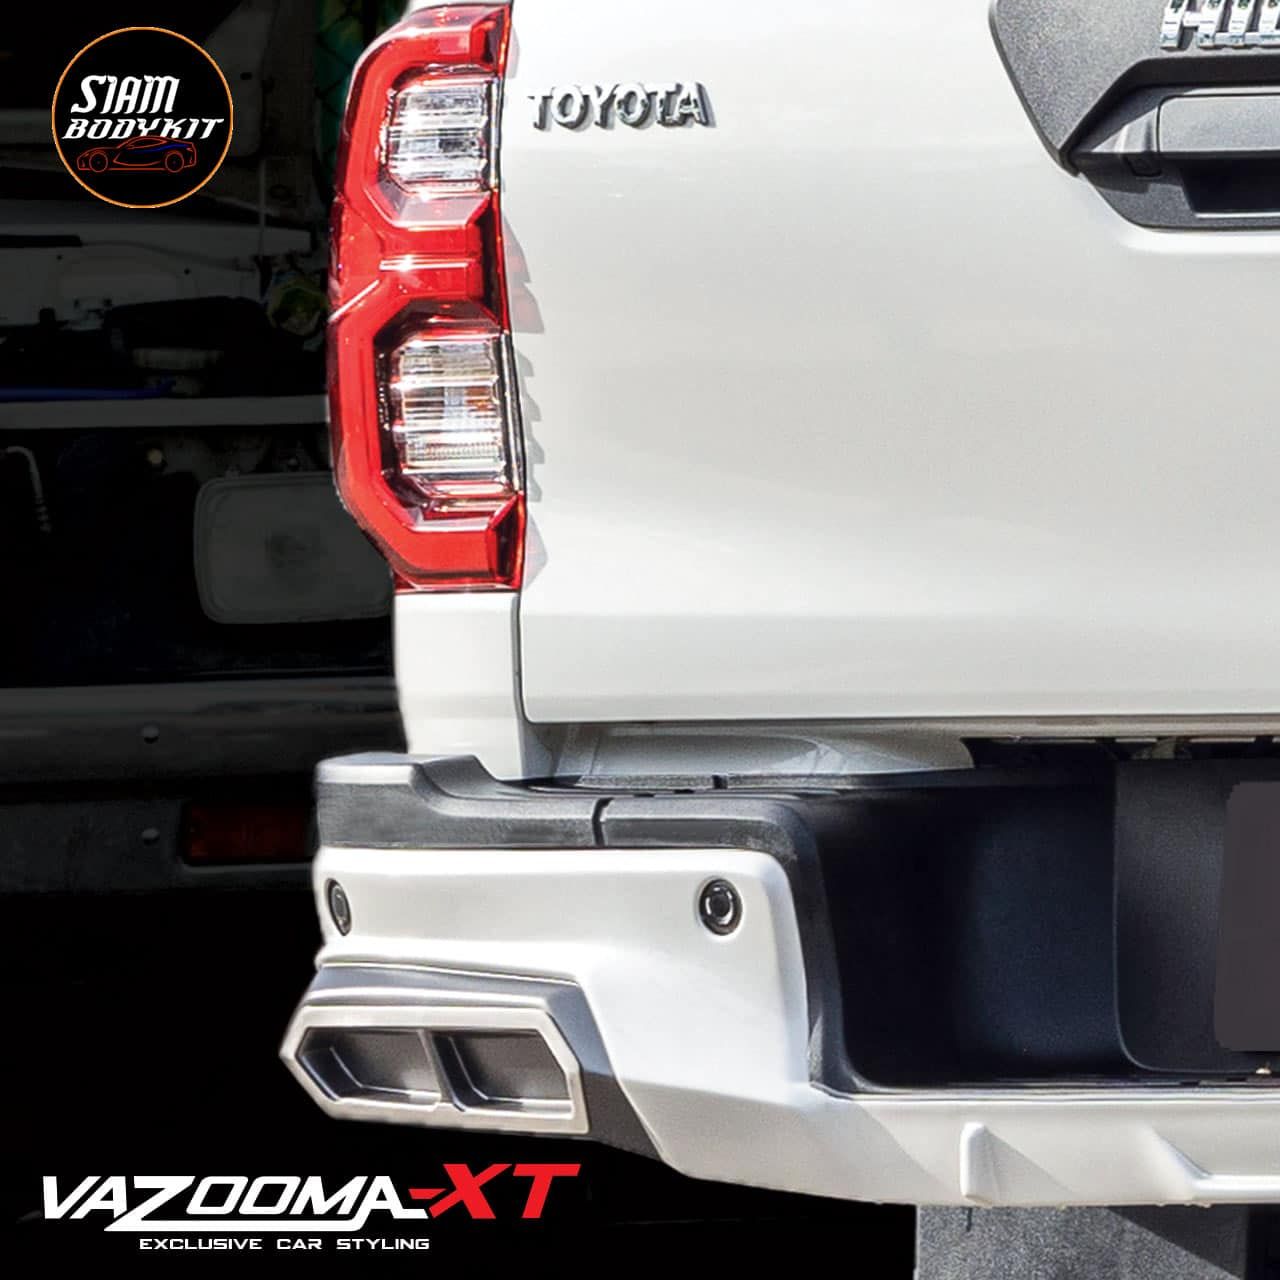 Vazooma-XT Bodykit for Toyota Revo Prerunner 2020-2022 (COLOR)